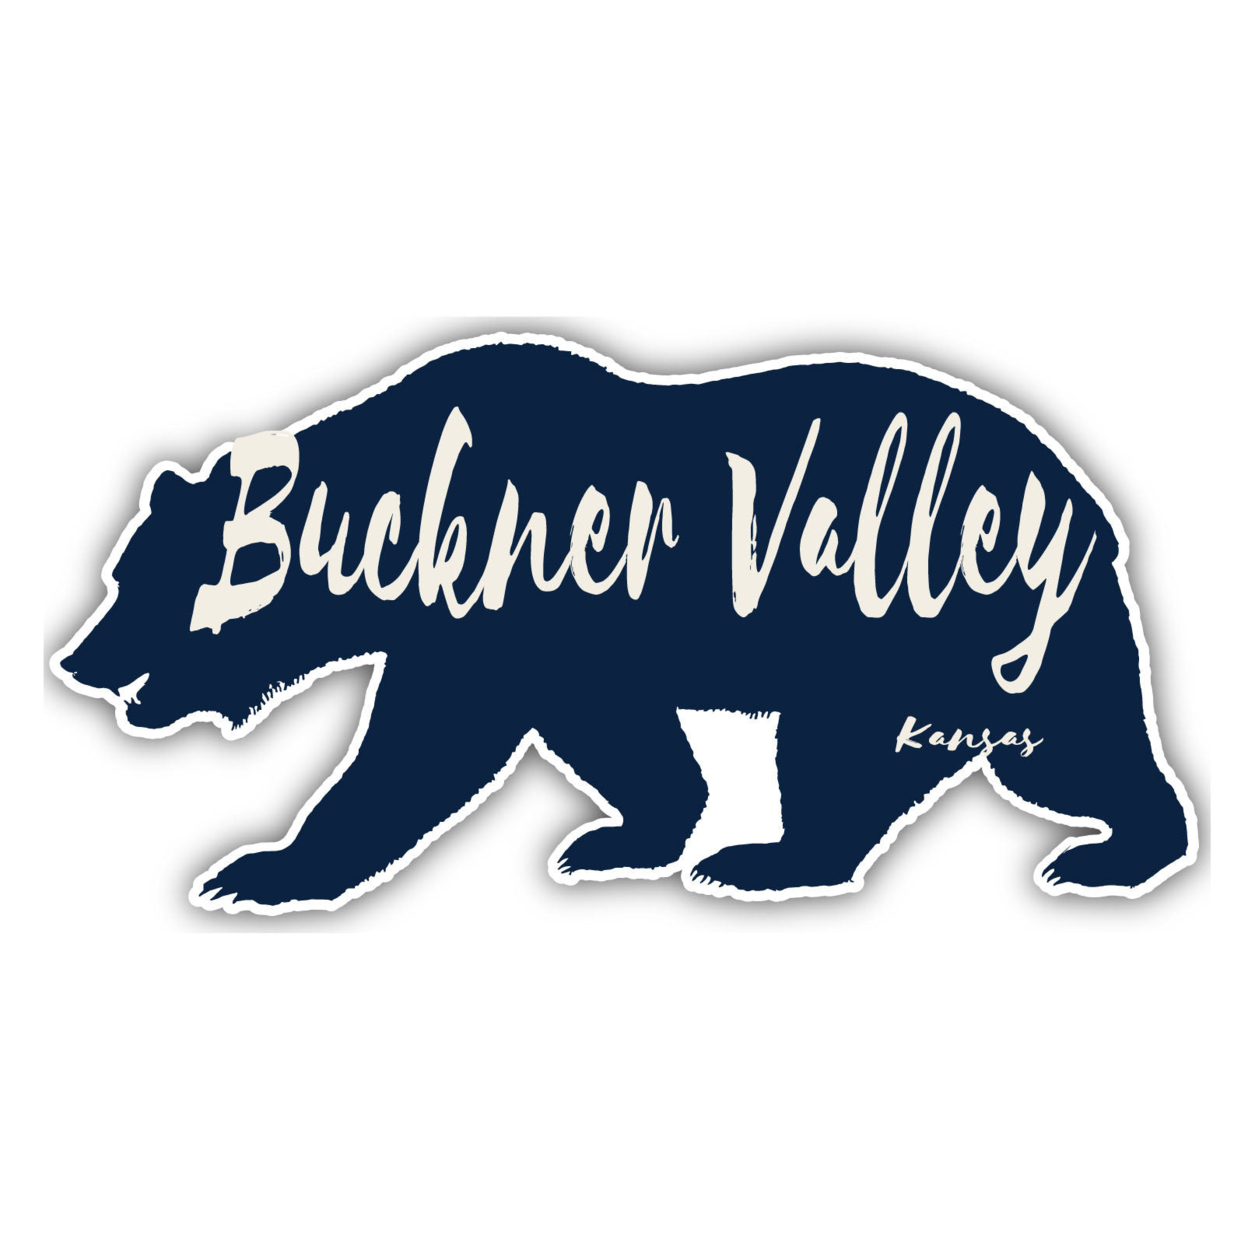 Buckner Valley Kansas Souvenir Decorative Stickers (Choose Theme And Size) - 4-Pack, 2-Inch, Bear